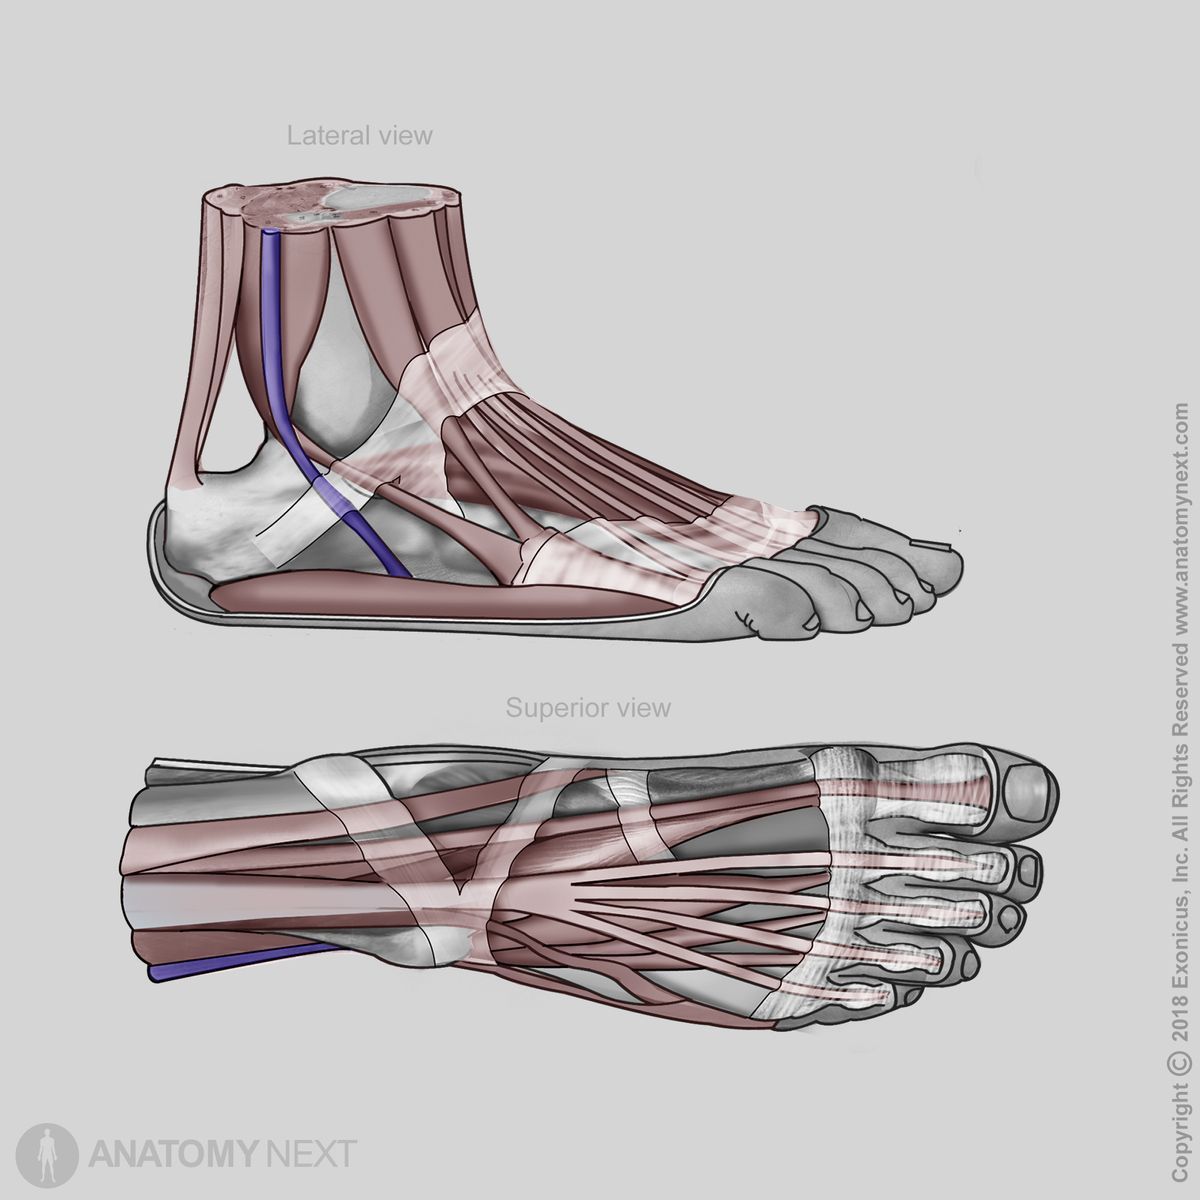 Peroneus longus, Fibularis longus, Insertion of peroneus longus, Insertion of fibularis longus, Lateral compartment of leg, Lateral compartment muscles, Leg muscles, Human foot